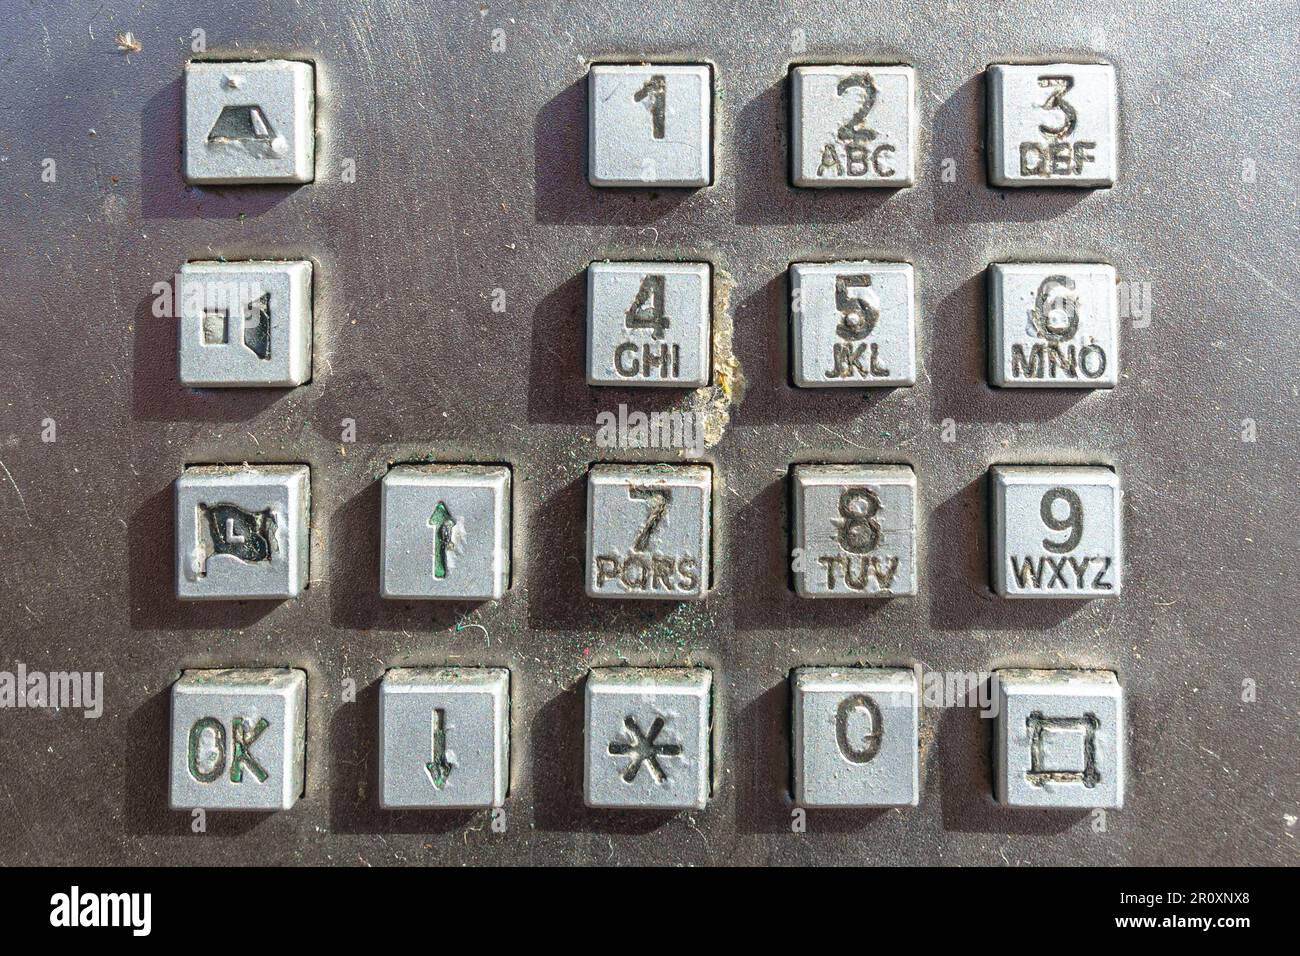 The keypad of a Telstra payphone Stock Photo